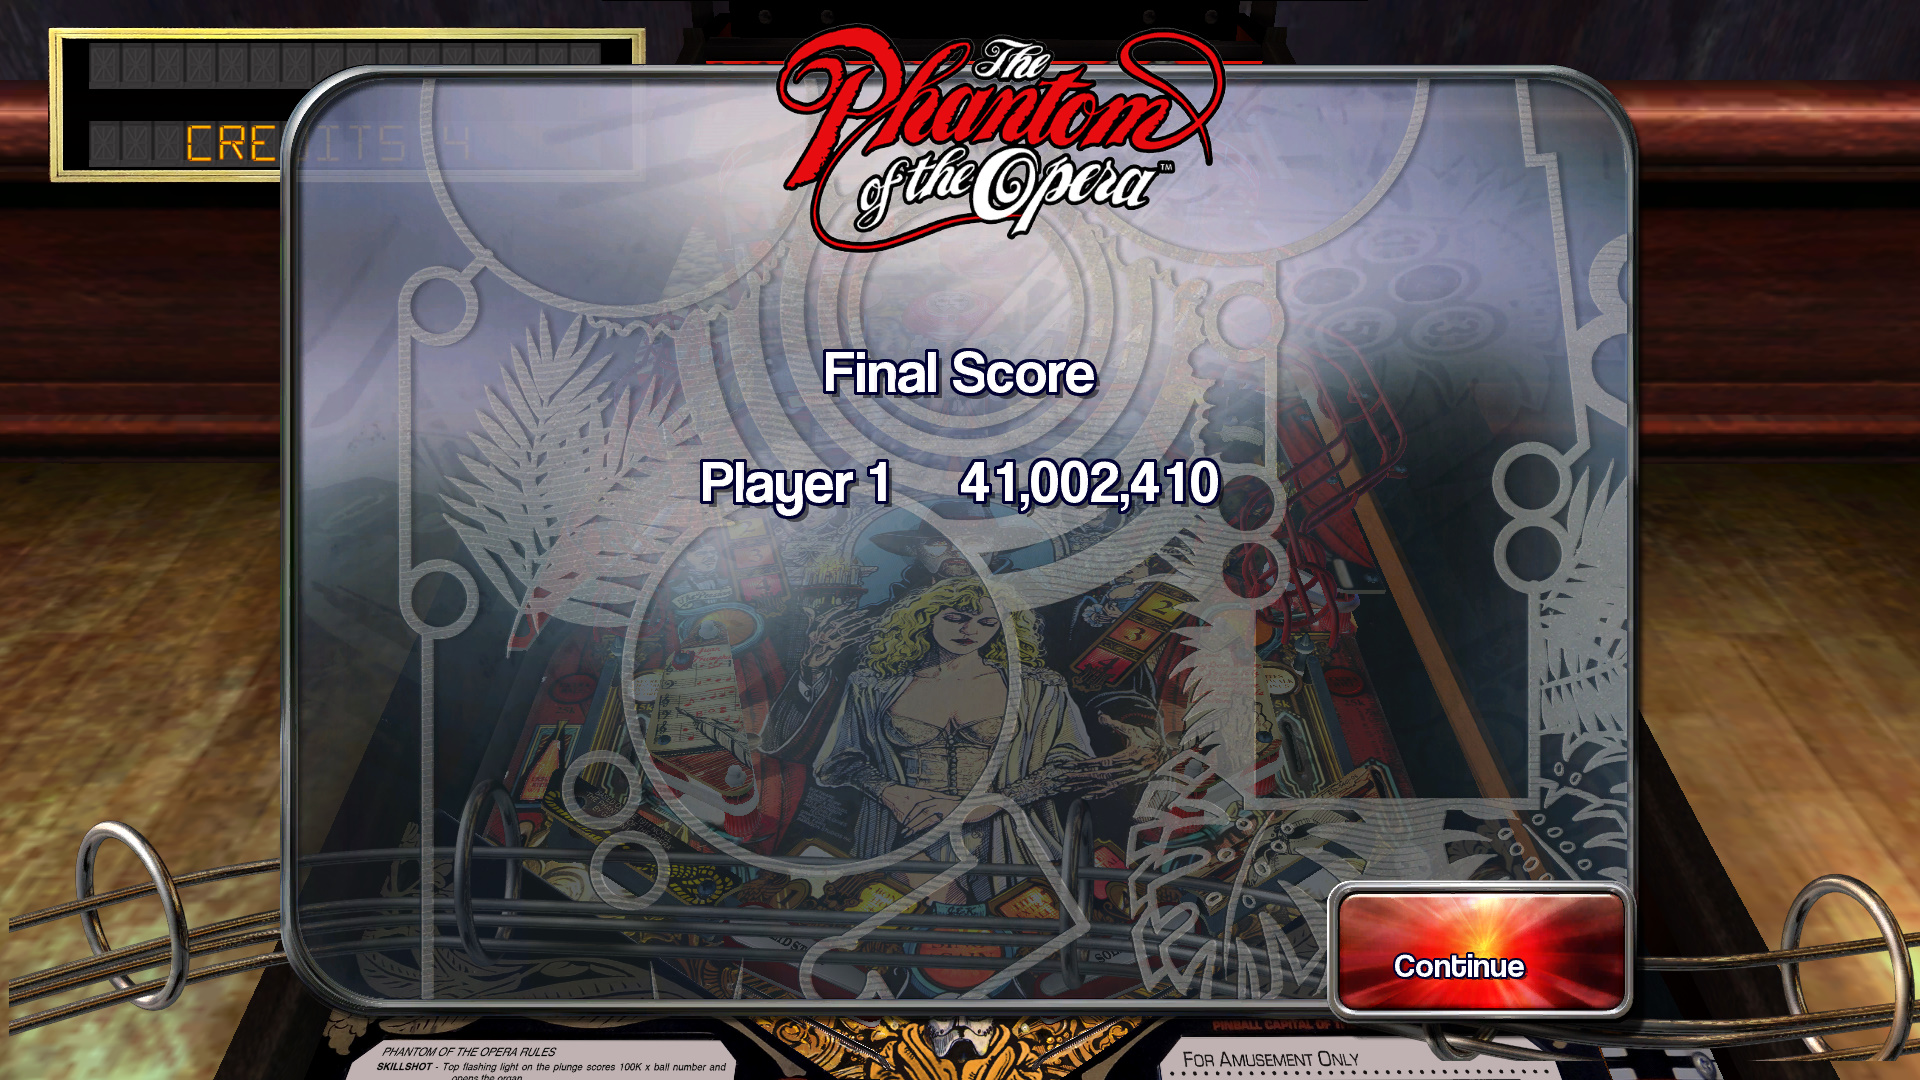 TheTrickster: Pinball Arcade: The Phantom Of The Opera (PC) 41,002,410 points on 2015-10-04 18:42:45